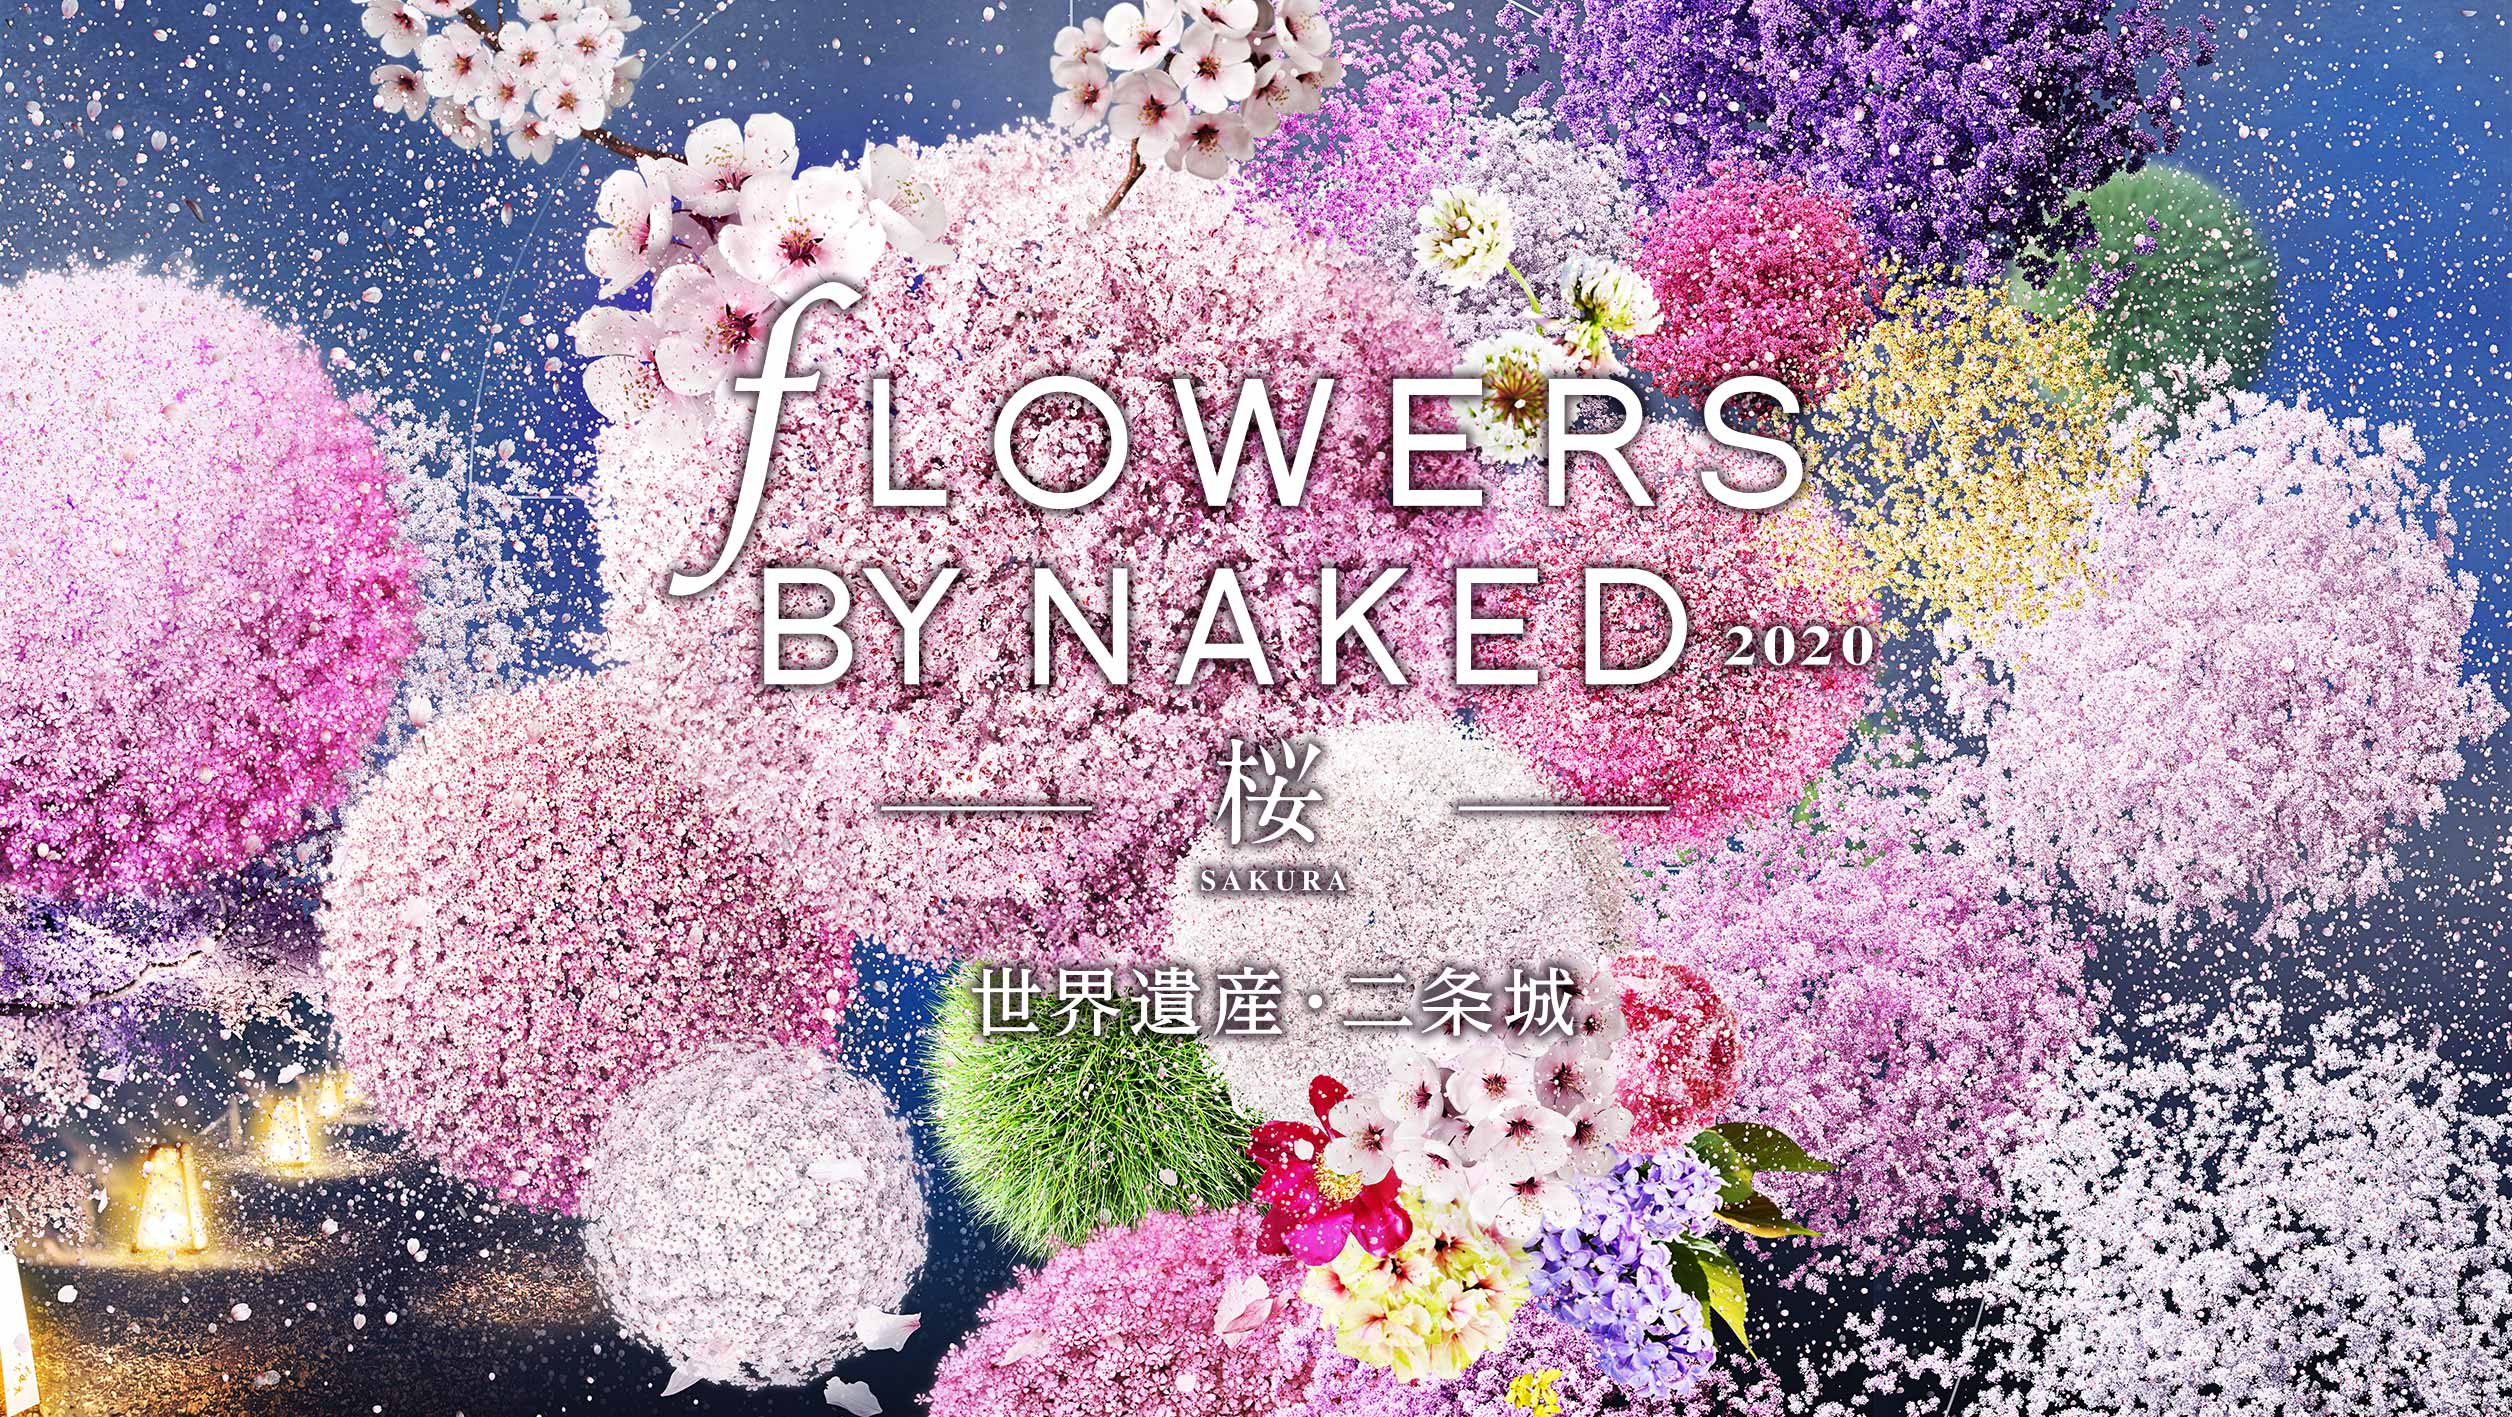 【FLOWERS BY NAKED 2020 −桜− 世界遺産・二条城】早割チケット発売中 NAKED FLOWERS 2021 −桜− 世界遺産・二条城